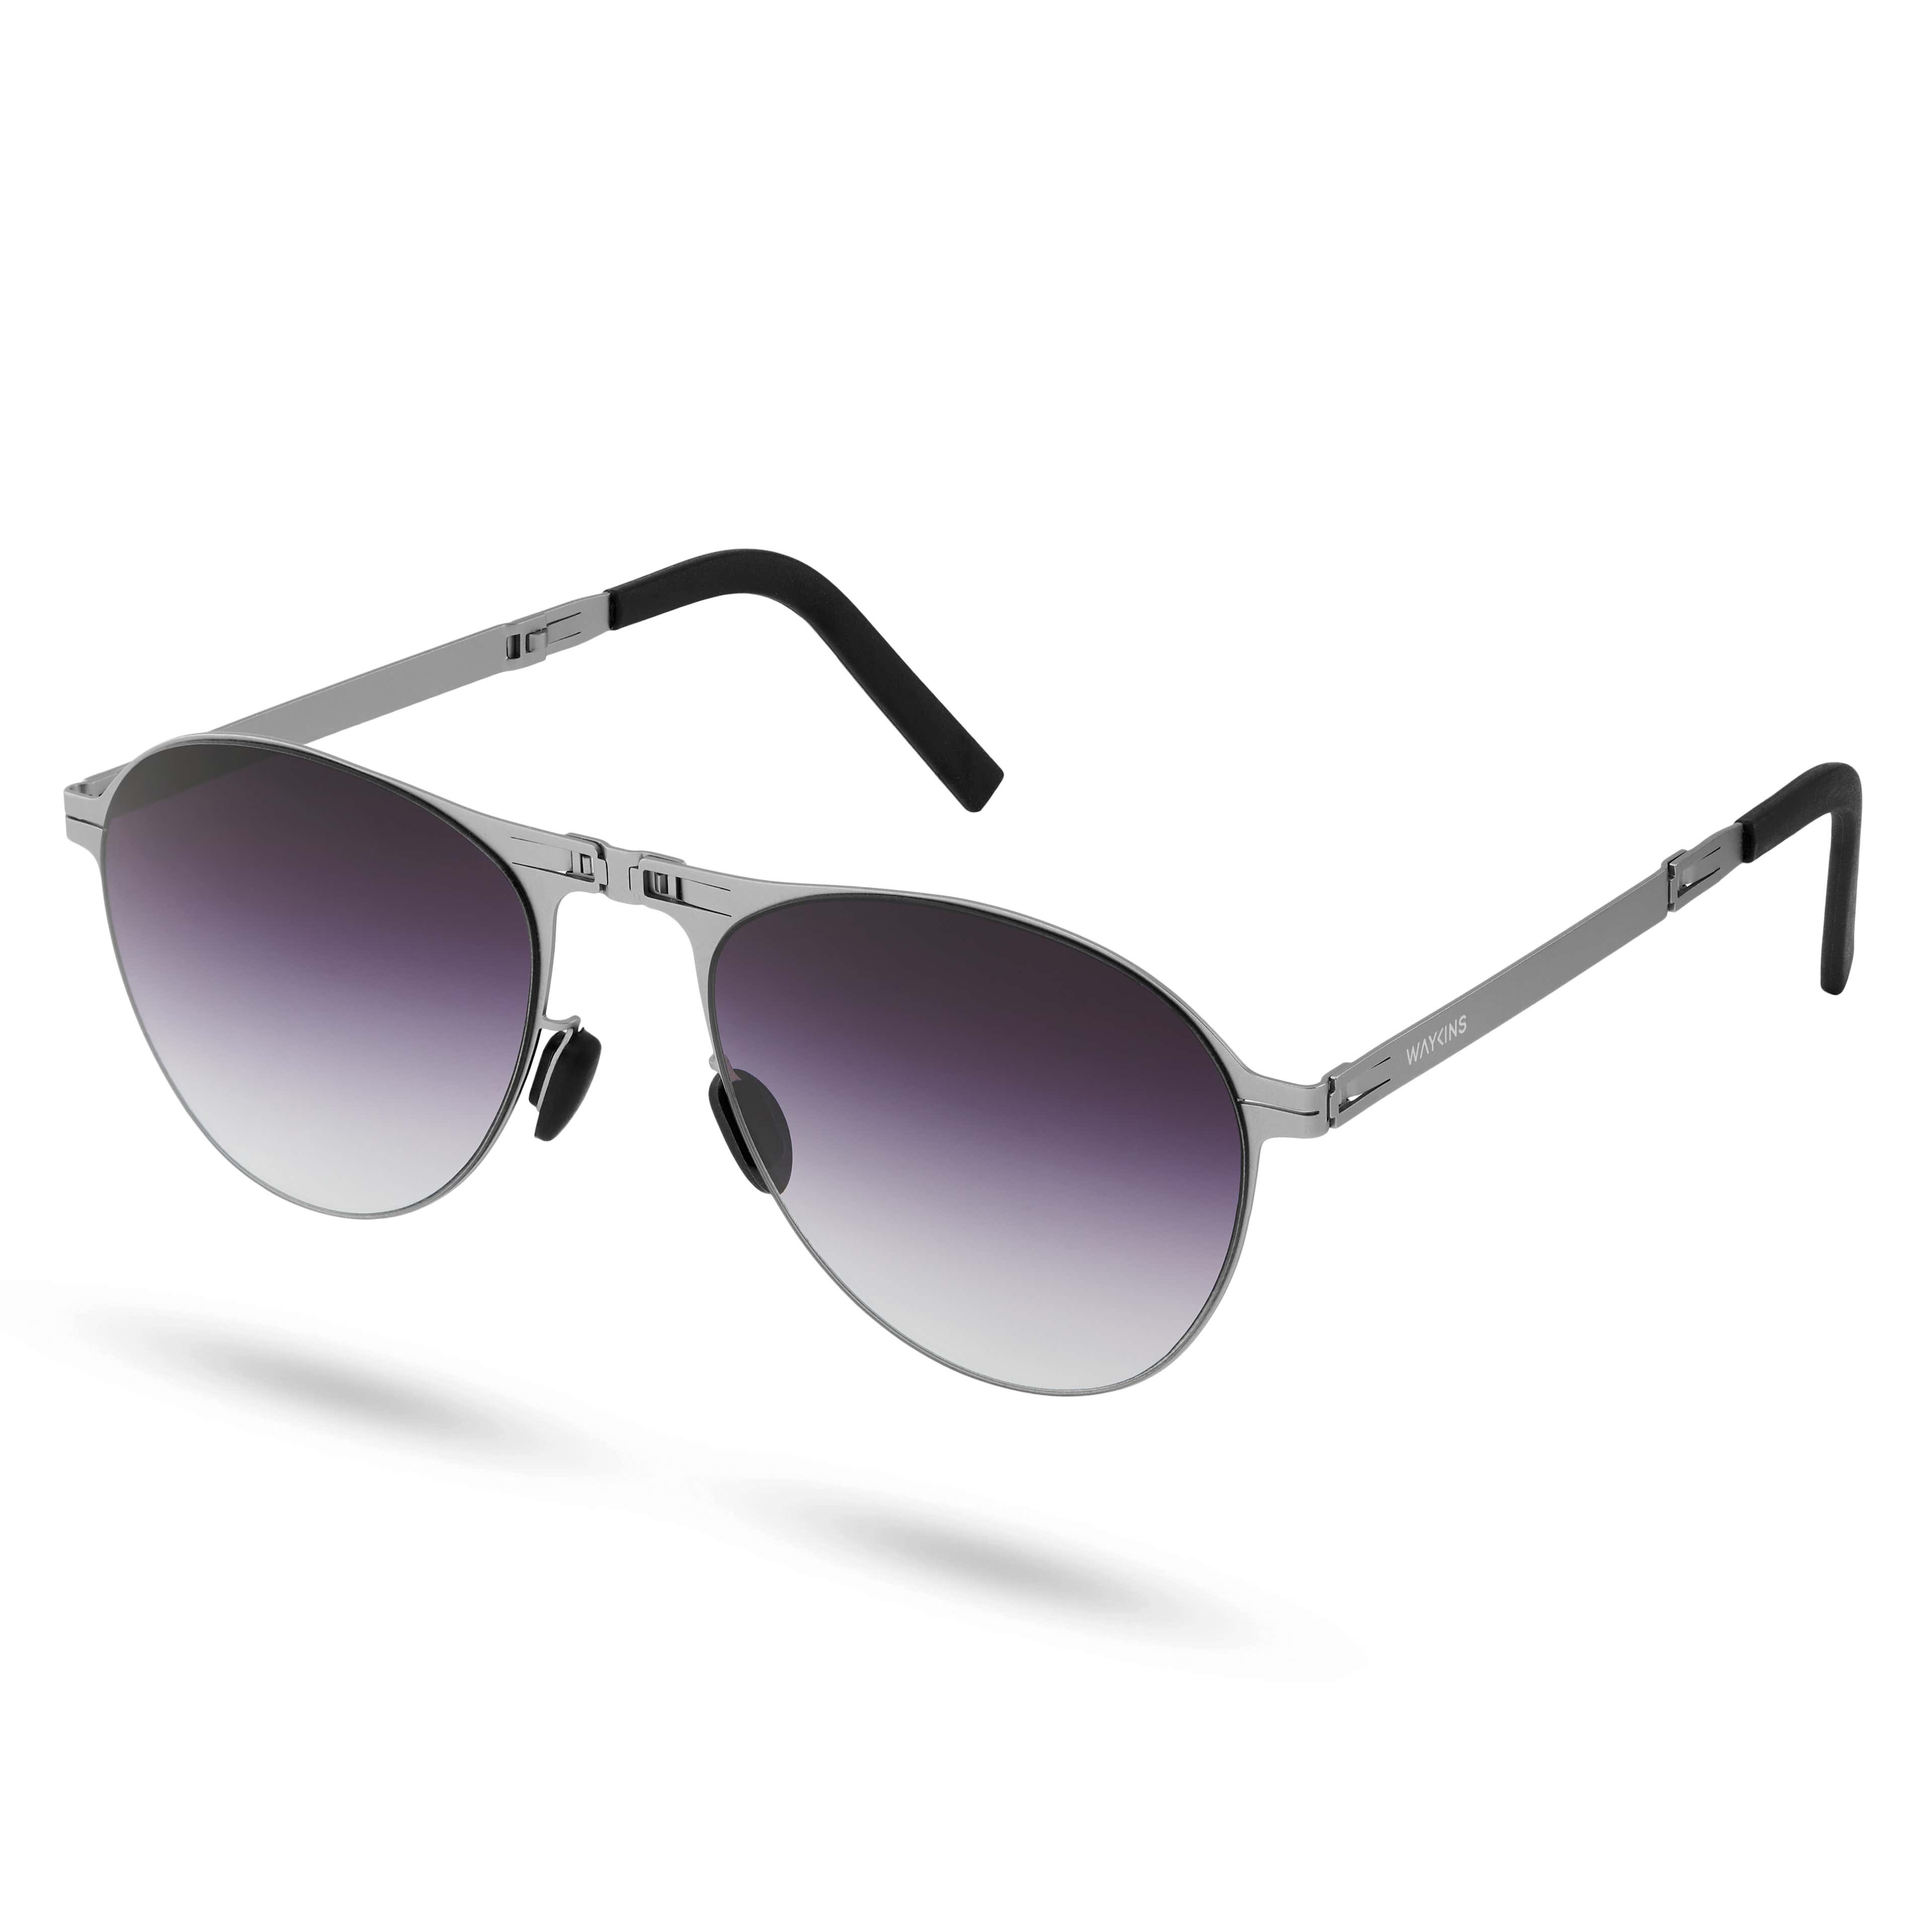 Whitmore Thea Silver-Tone Folding Sunglasses